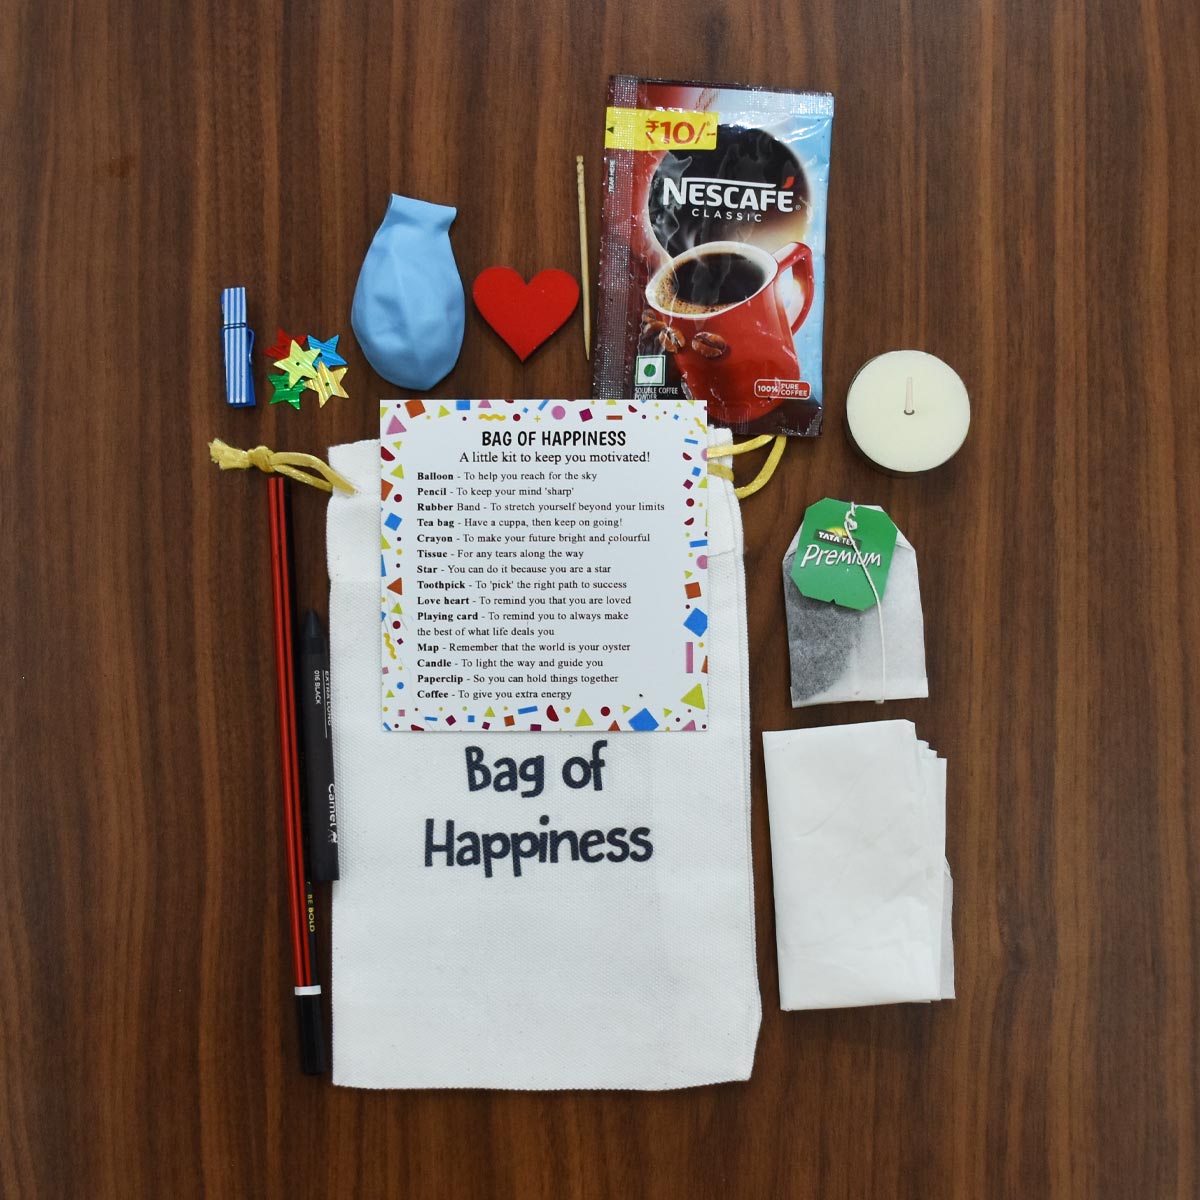 Bag of Happiness - Motivation Kit